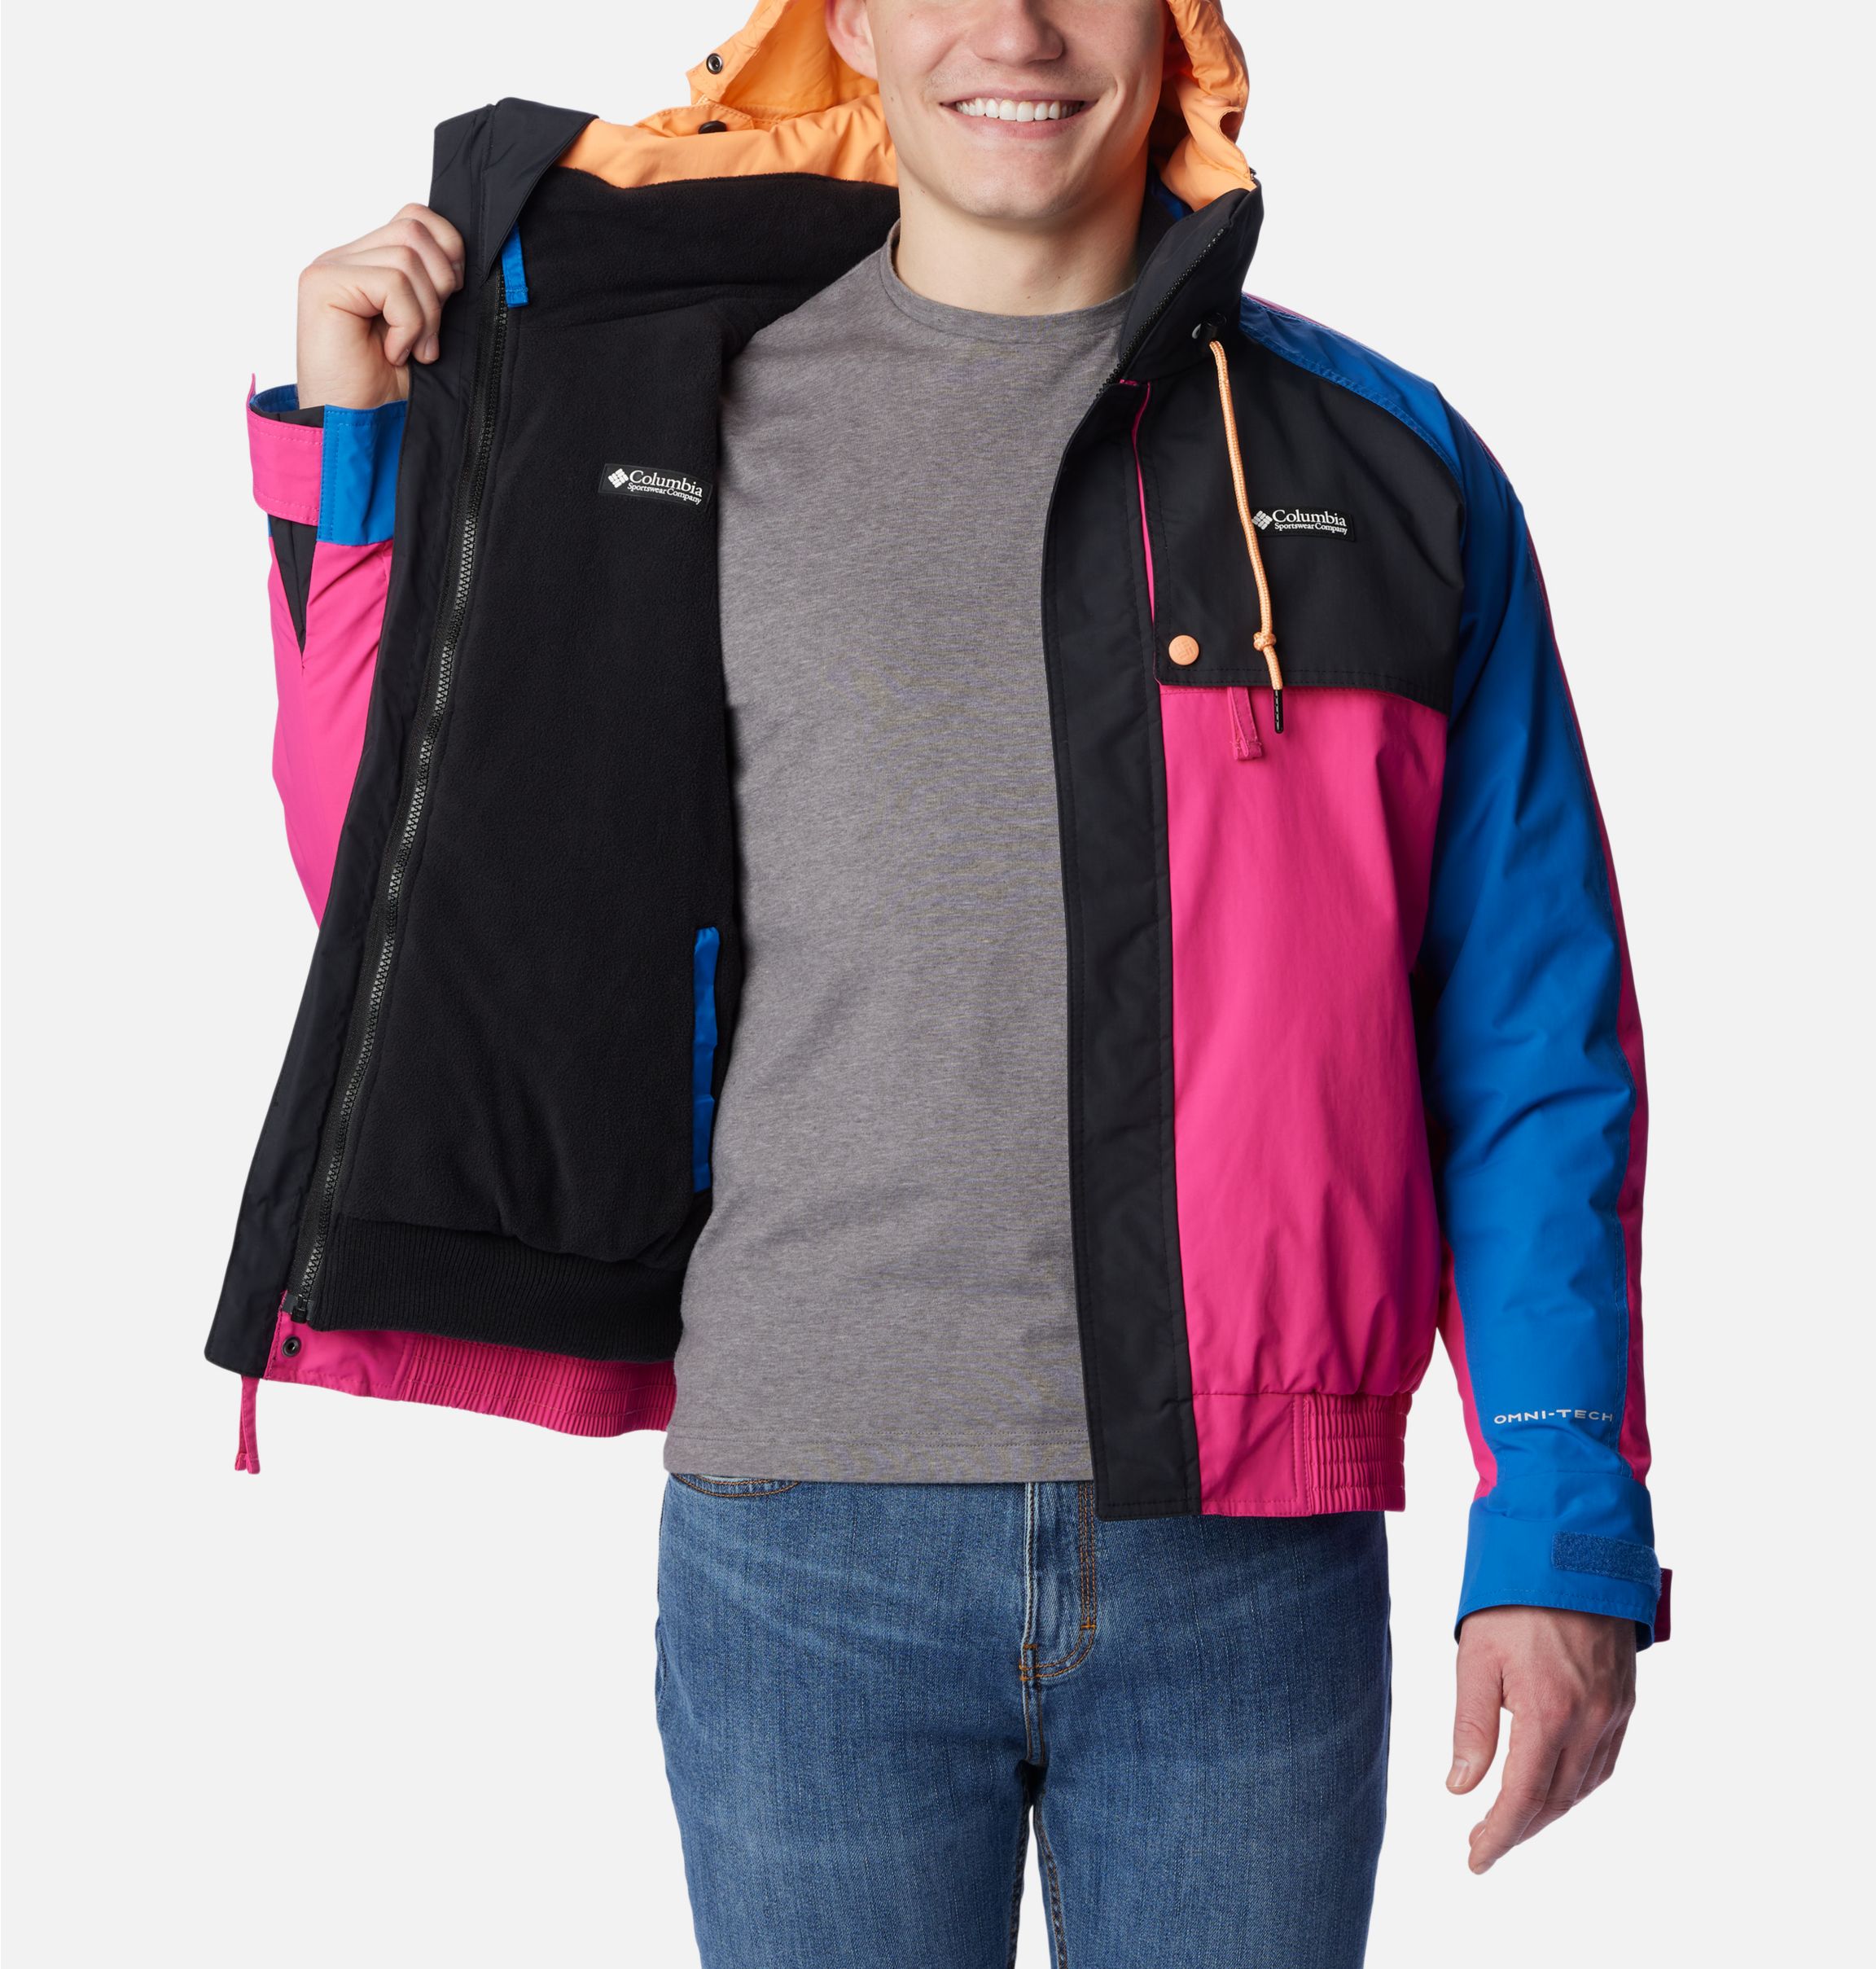 Columbia Sportswear Interchange Omni-Tech jacket, men's size Small